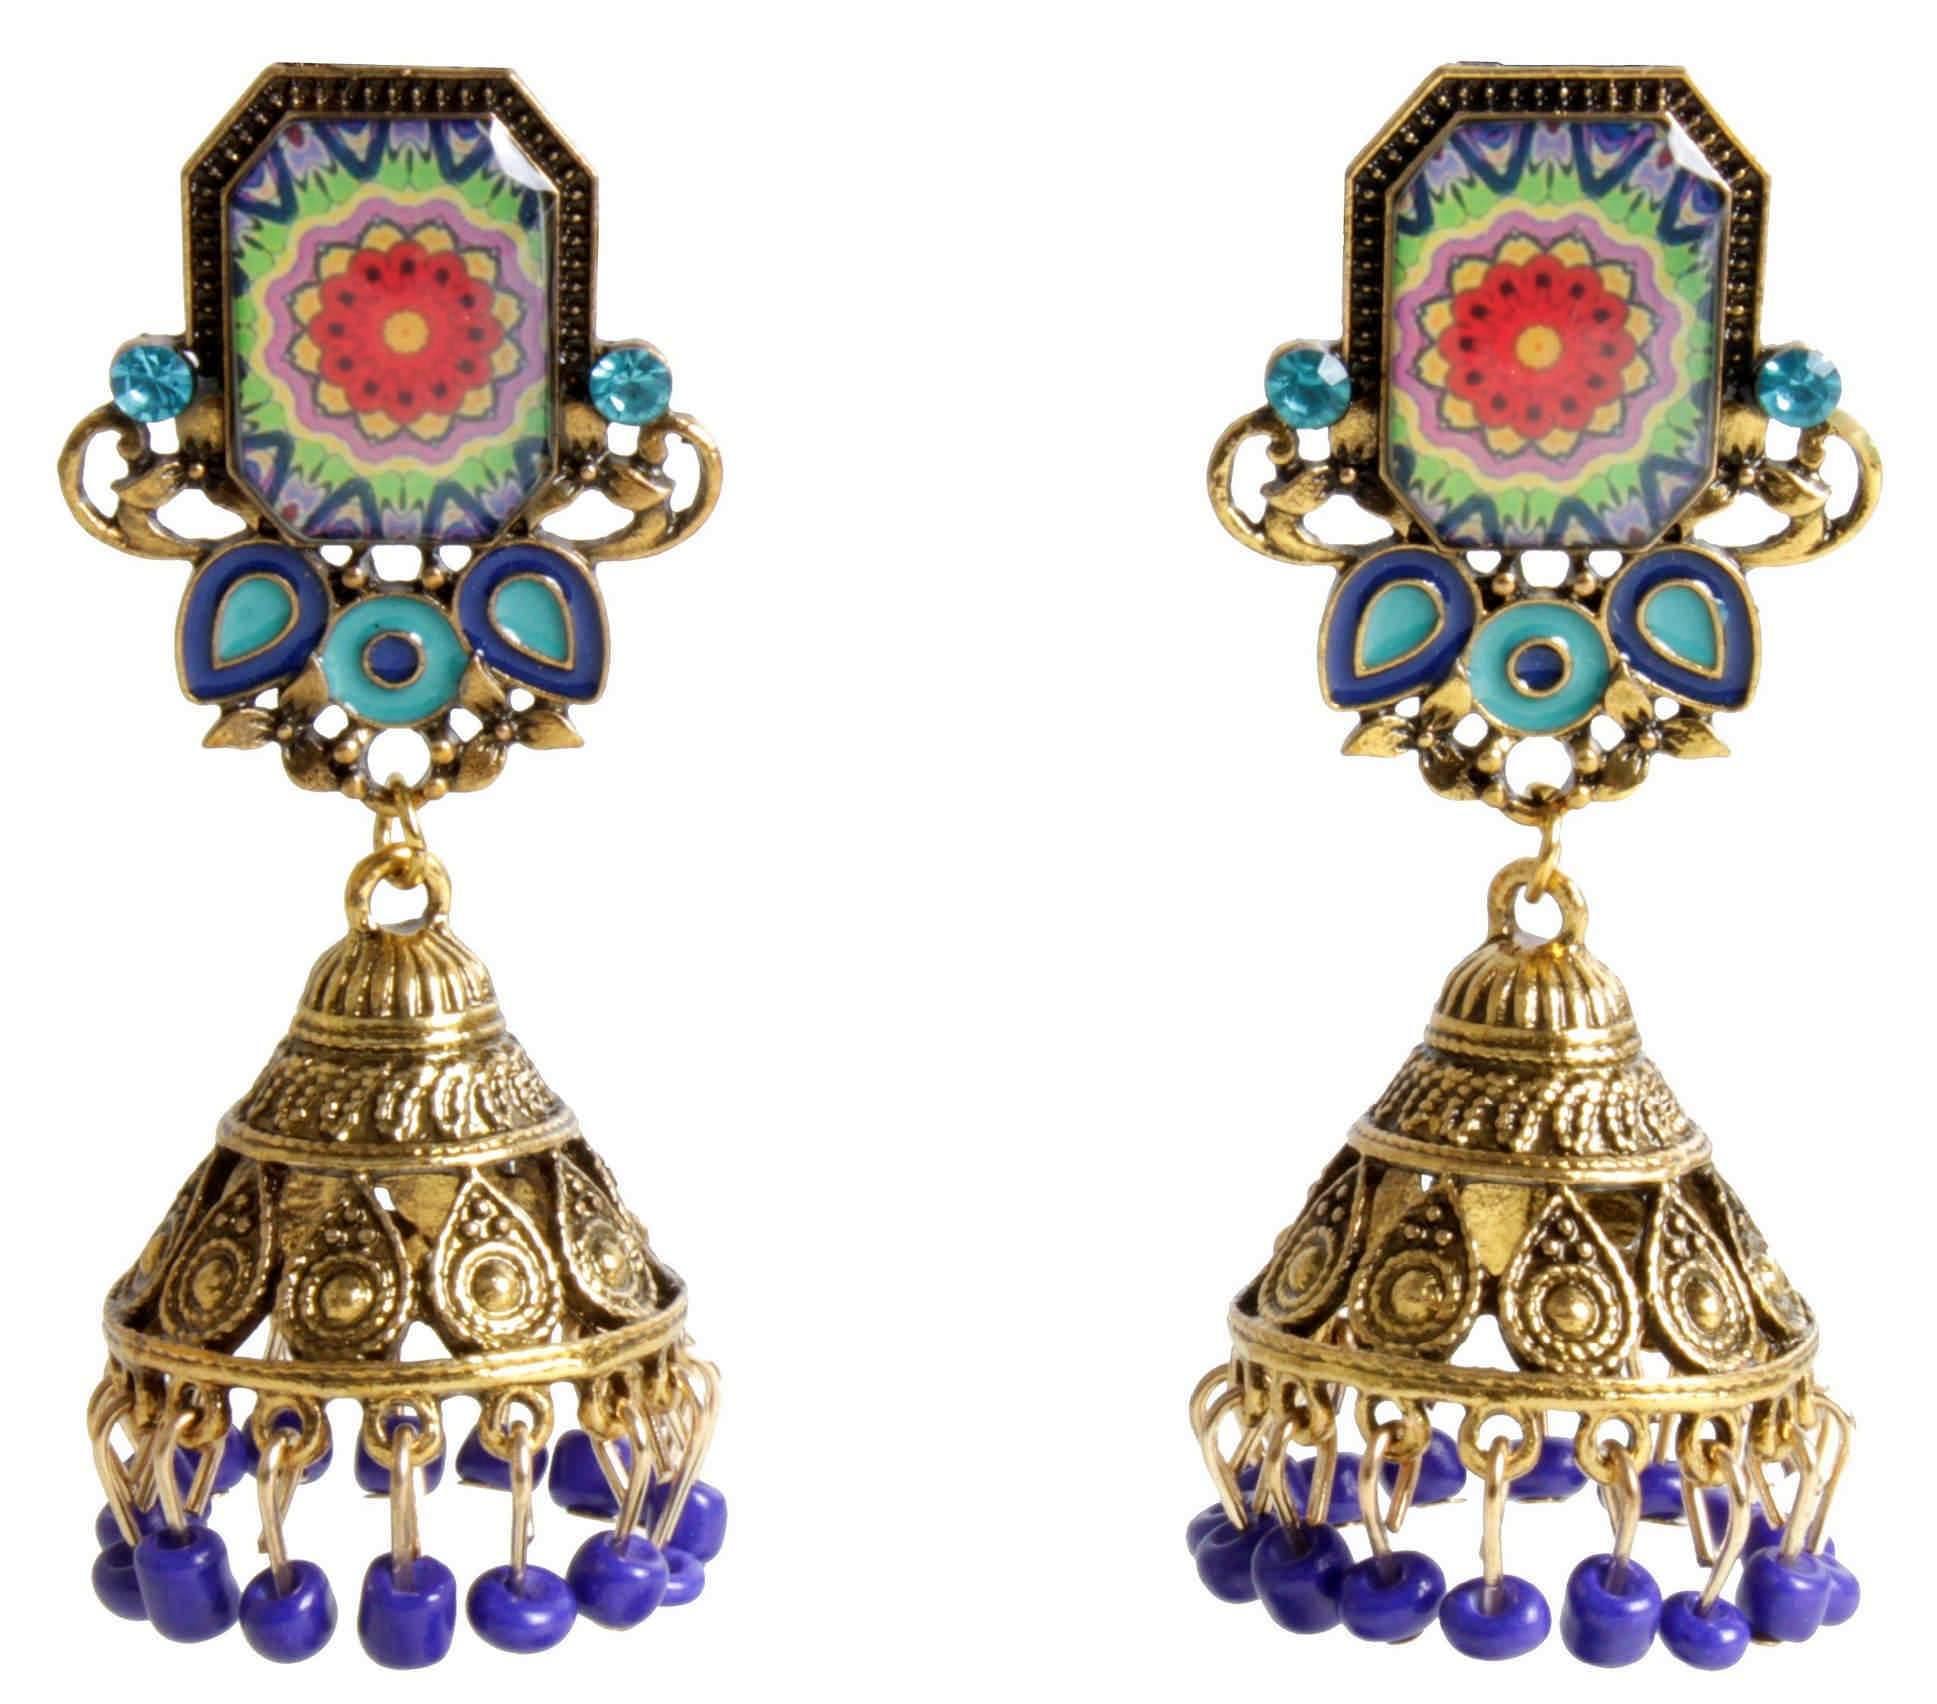 Indian Petals Rajputi Style Stone Fashion Gold Artificial Fashion Dangler Jhumka Earrings with Drops for Girls Women - Indian Petals